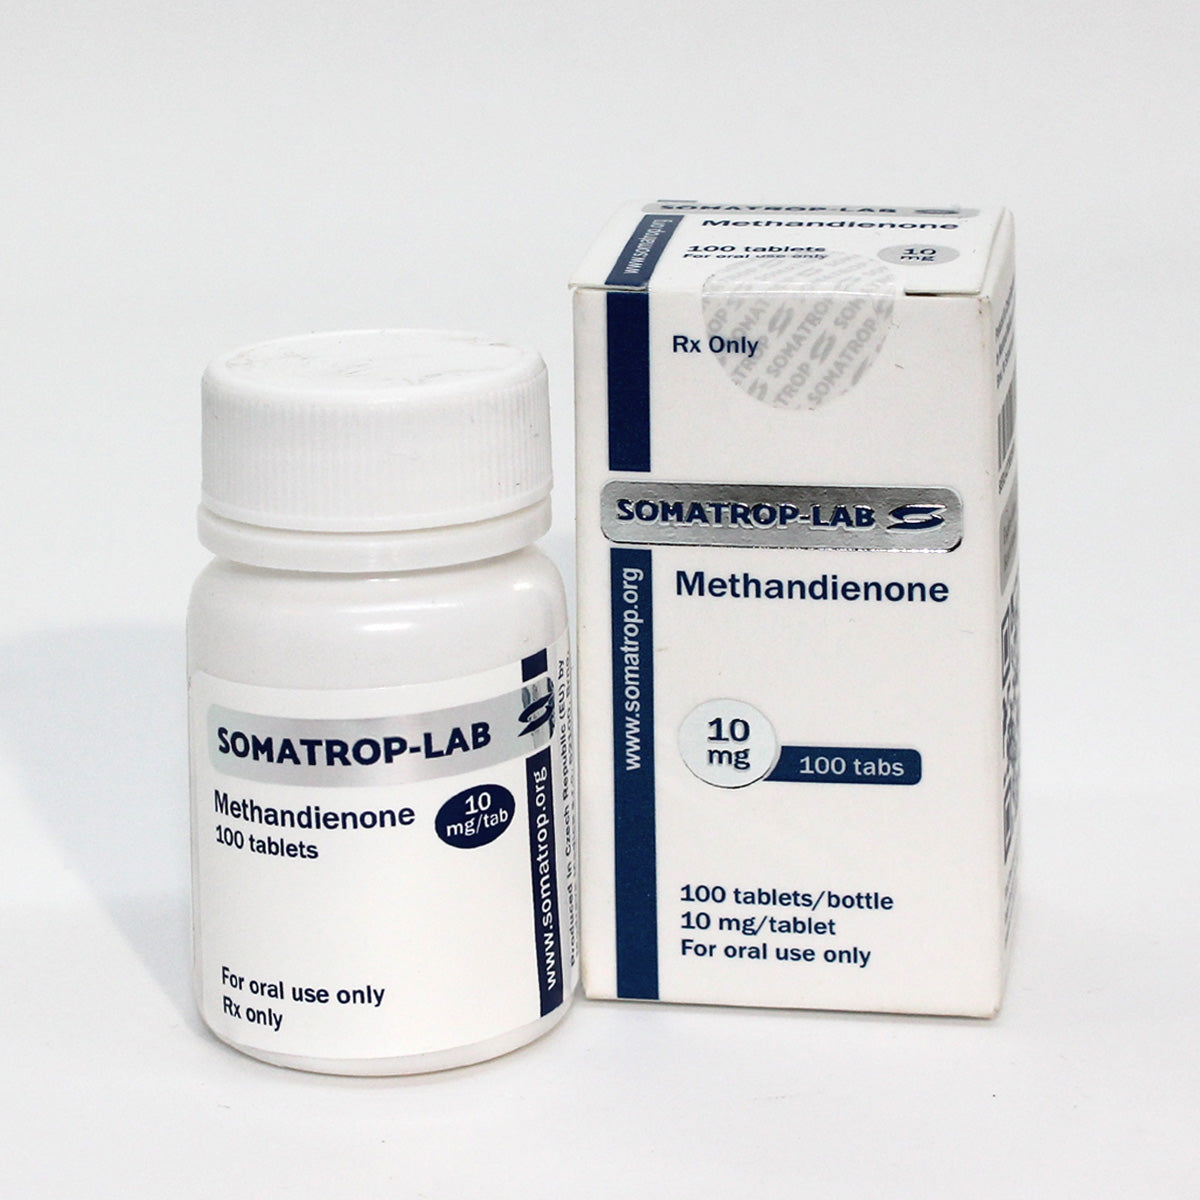 Somatrop-Lab Methandienone 100 tablets, 10mg each, front packaging.